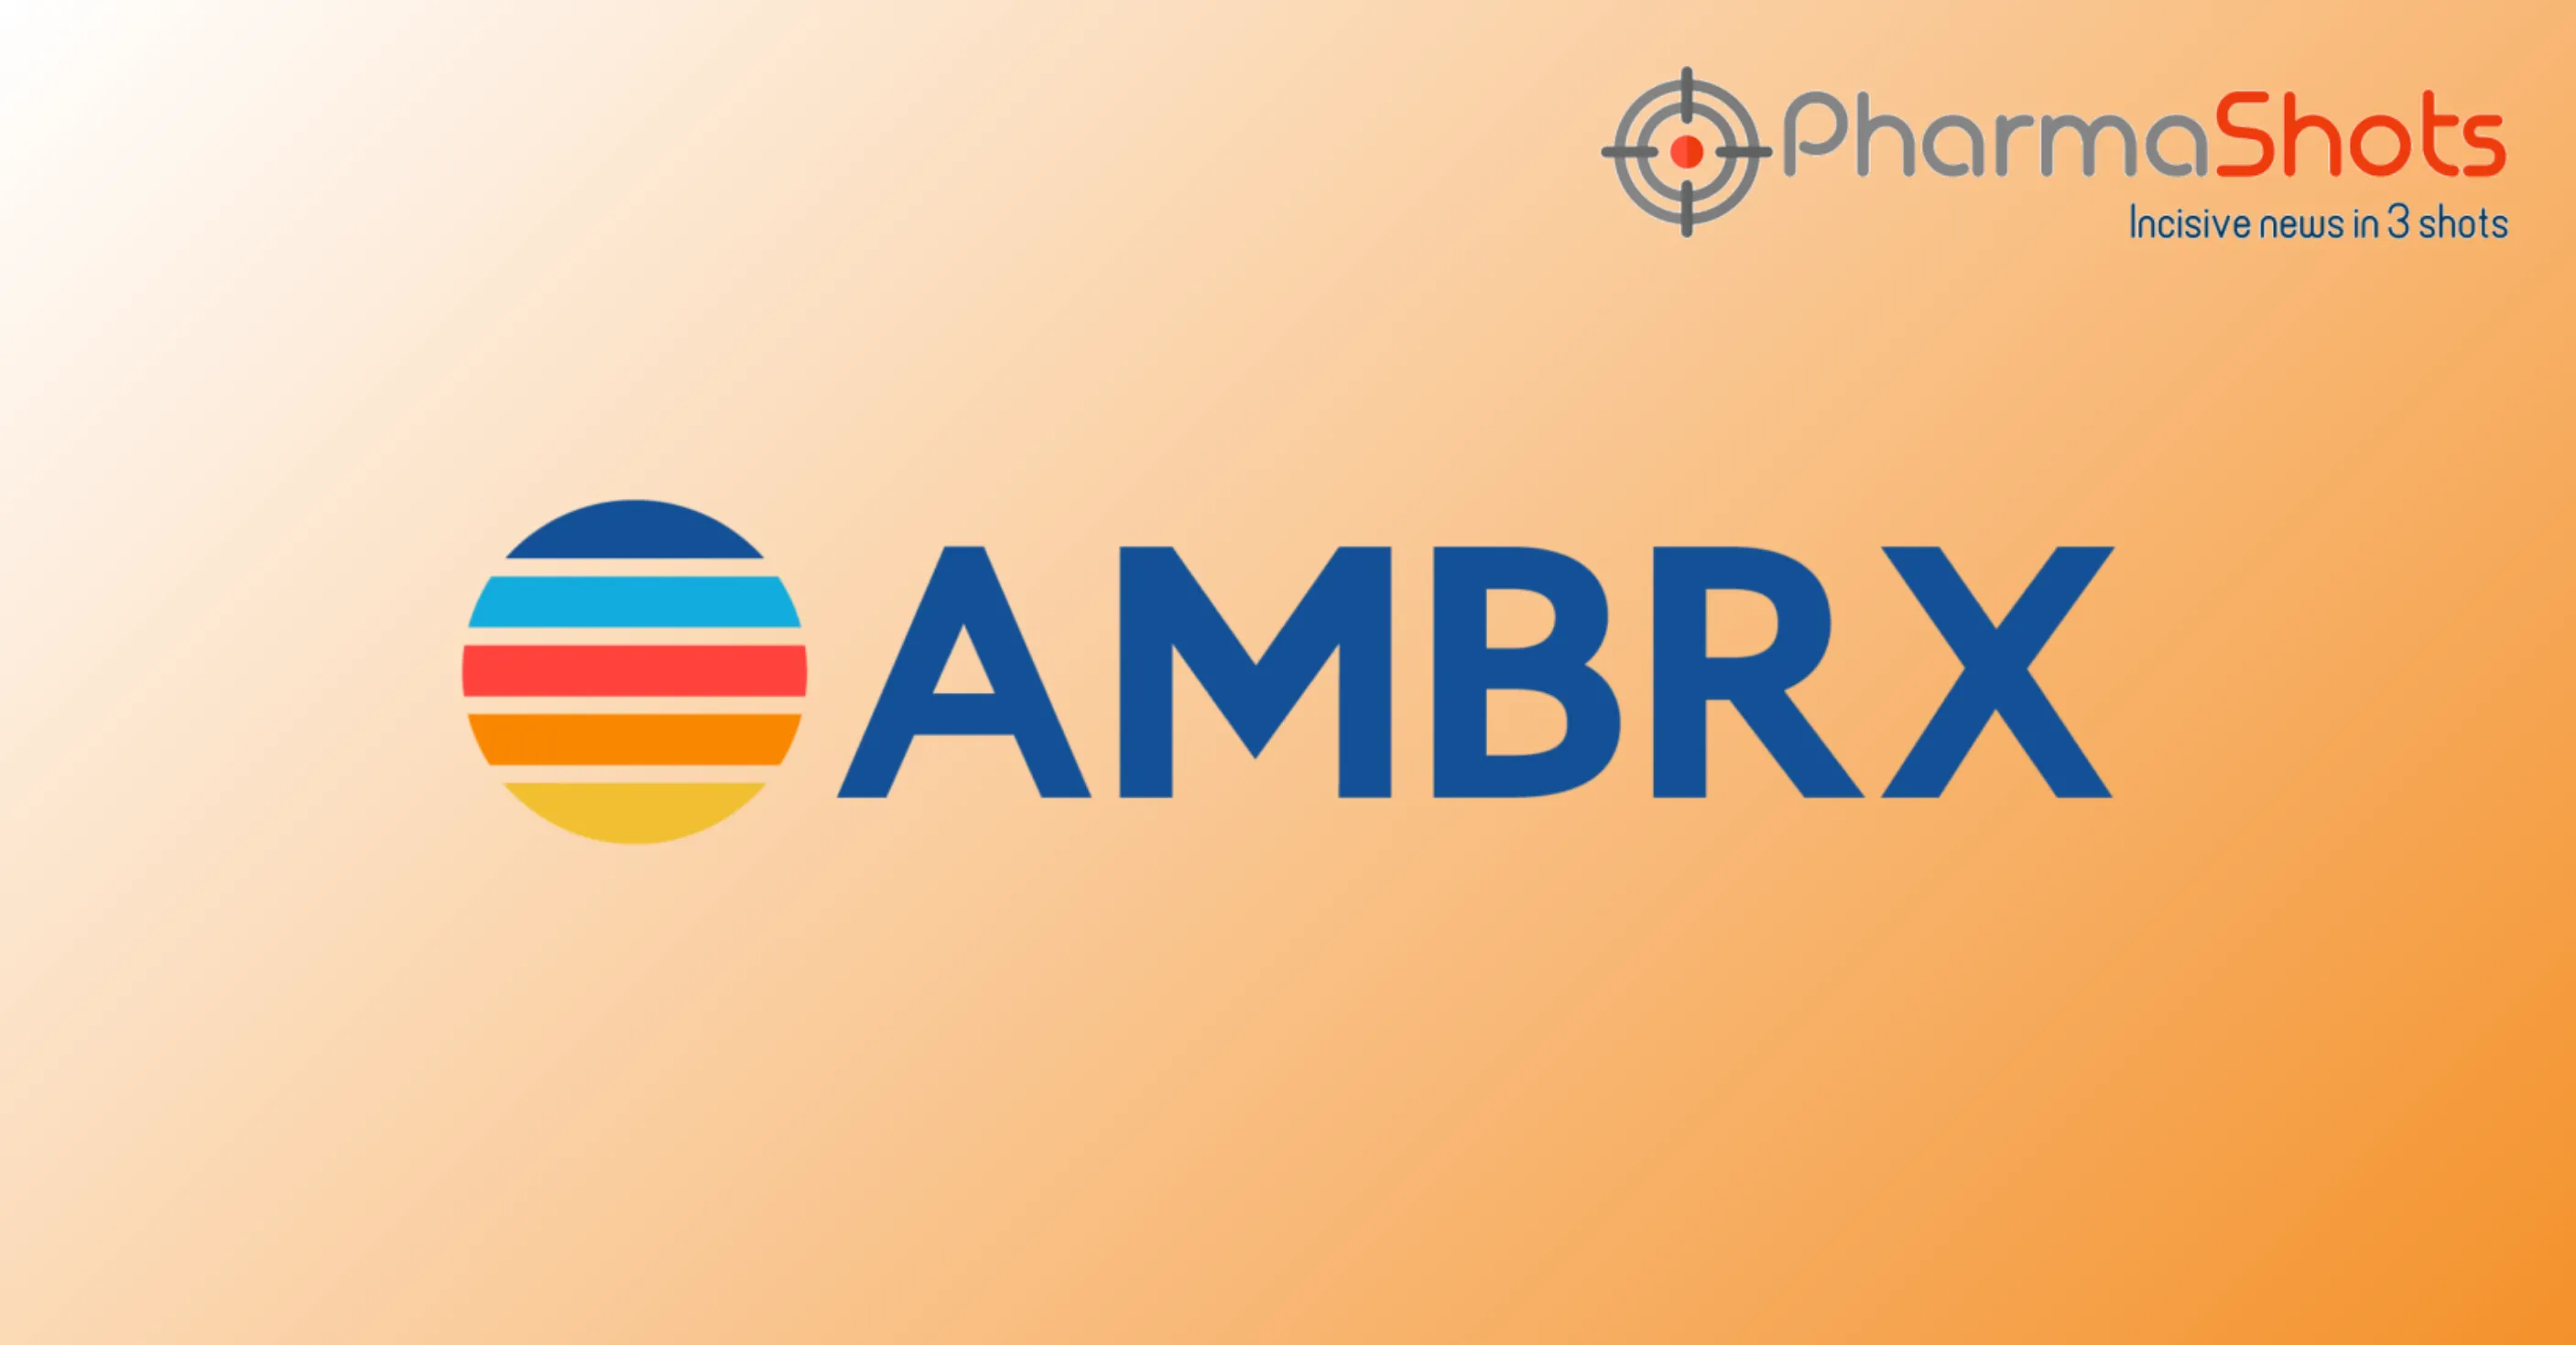 Johnson & Johnson Acquires Ambrx Biopharma for ~$2.0B